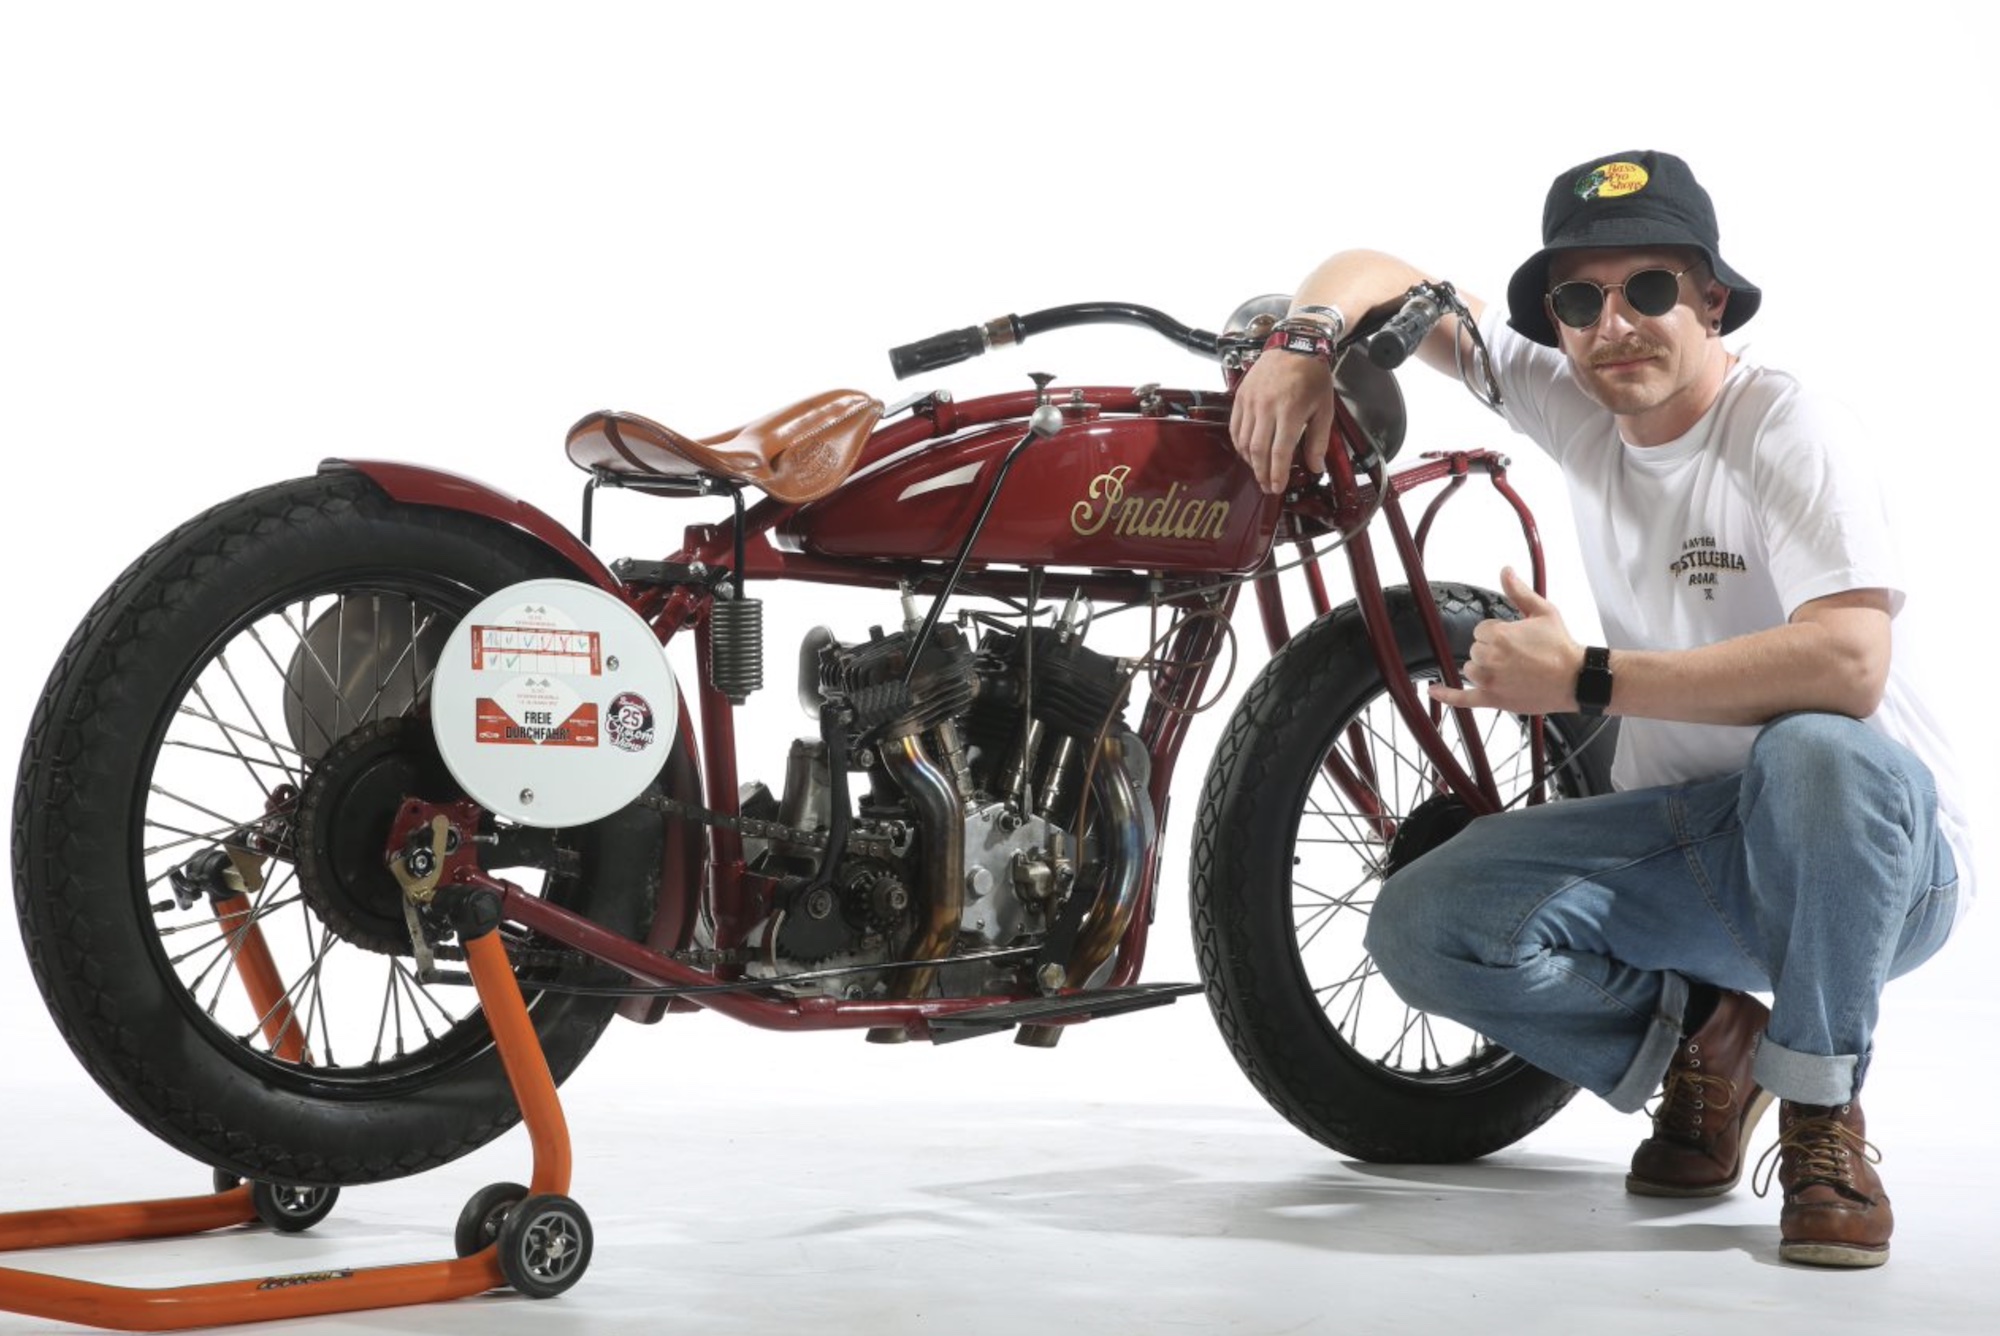 Indian Vintage Winner - (#25) Sebastian Neumann, Germany. Media sourced from Indian Motorcycles. 